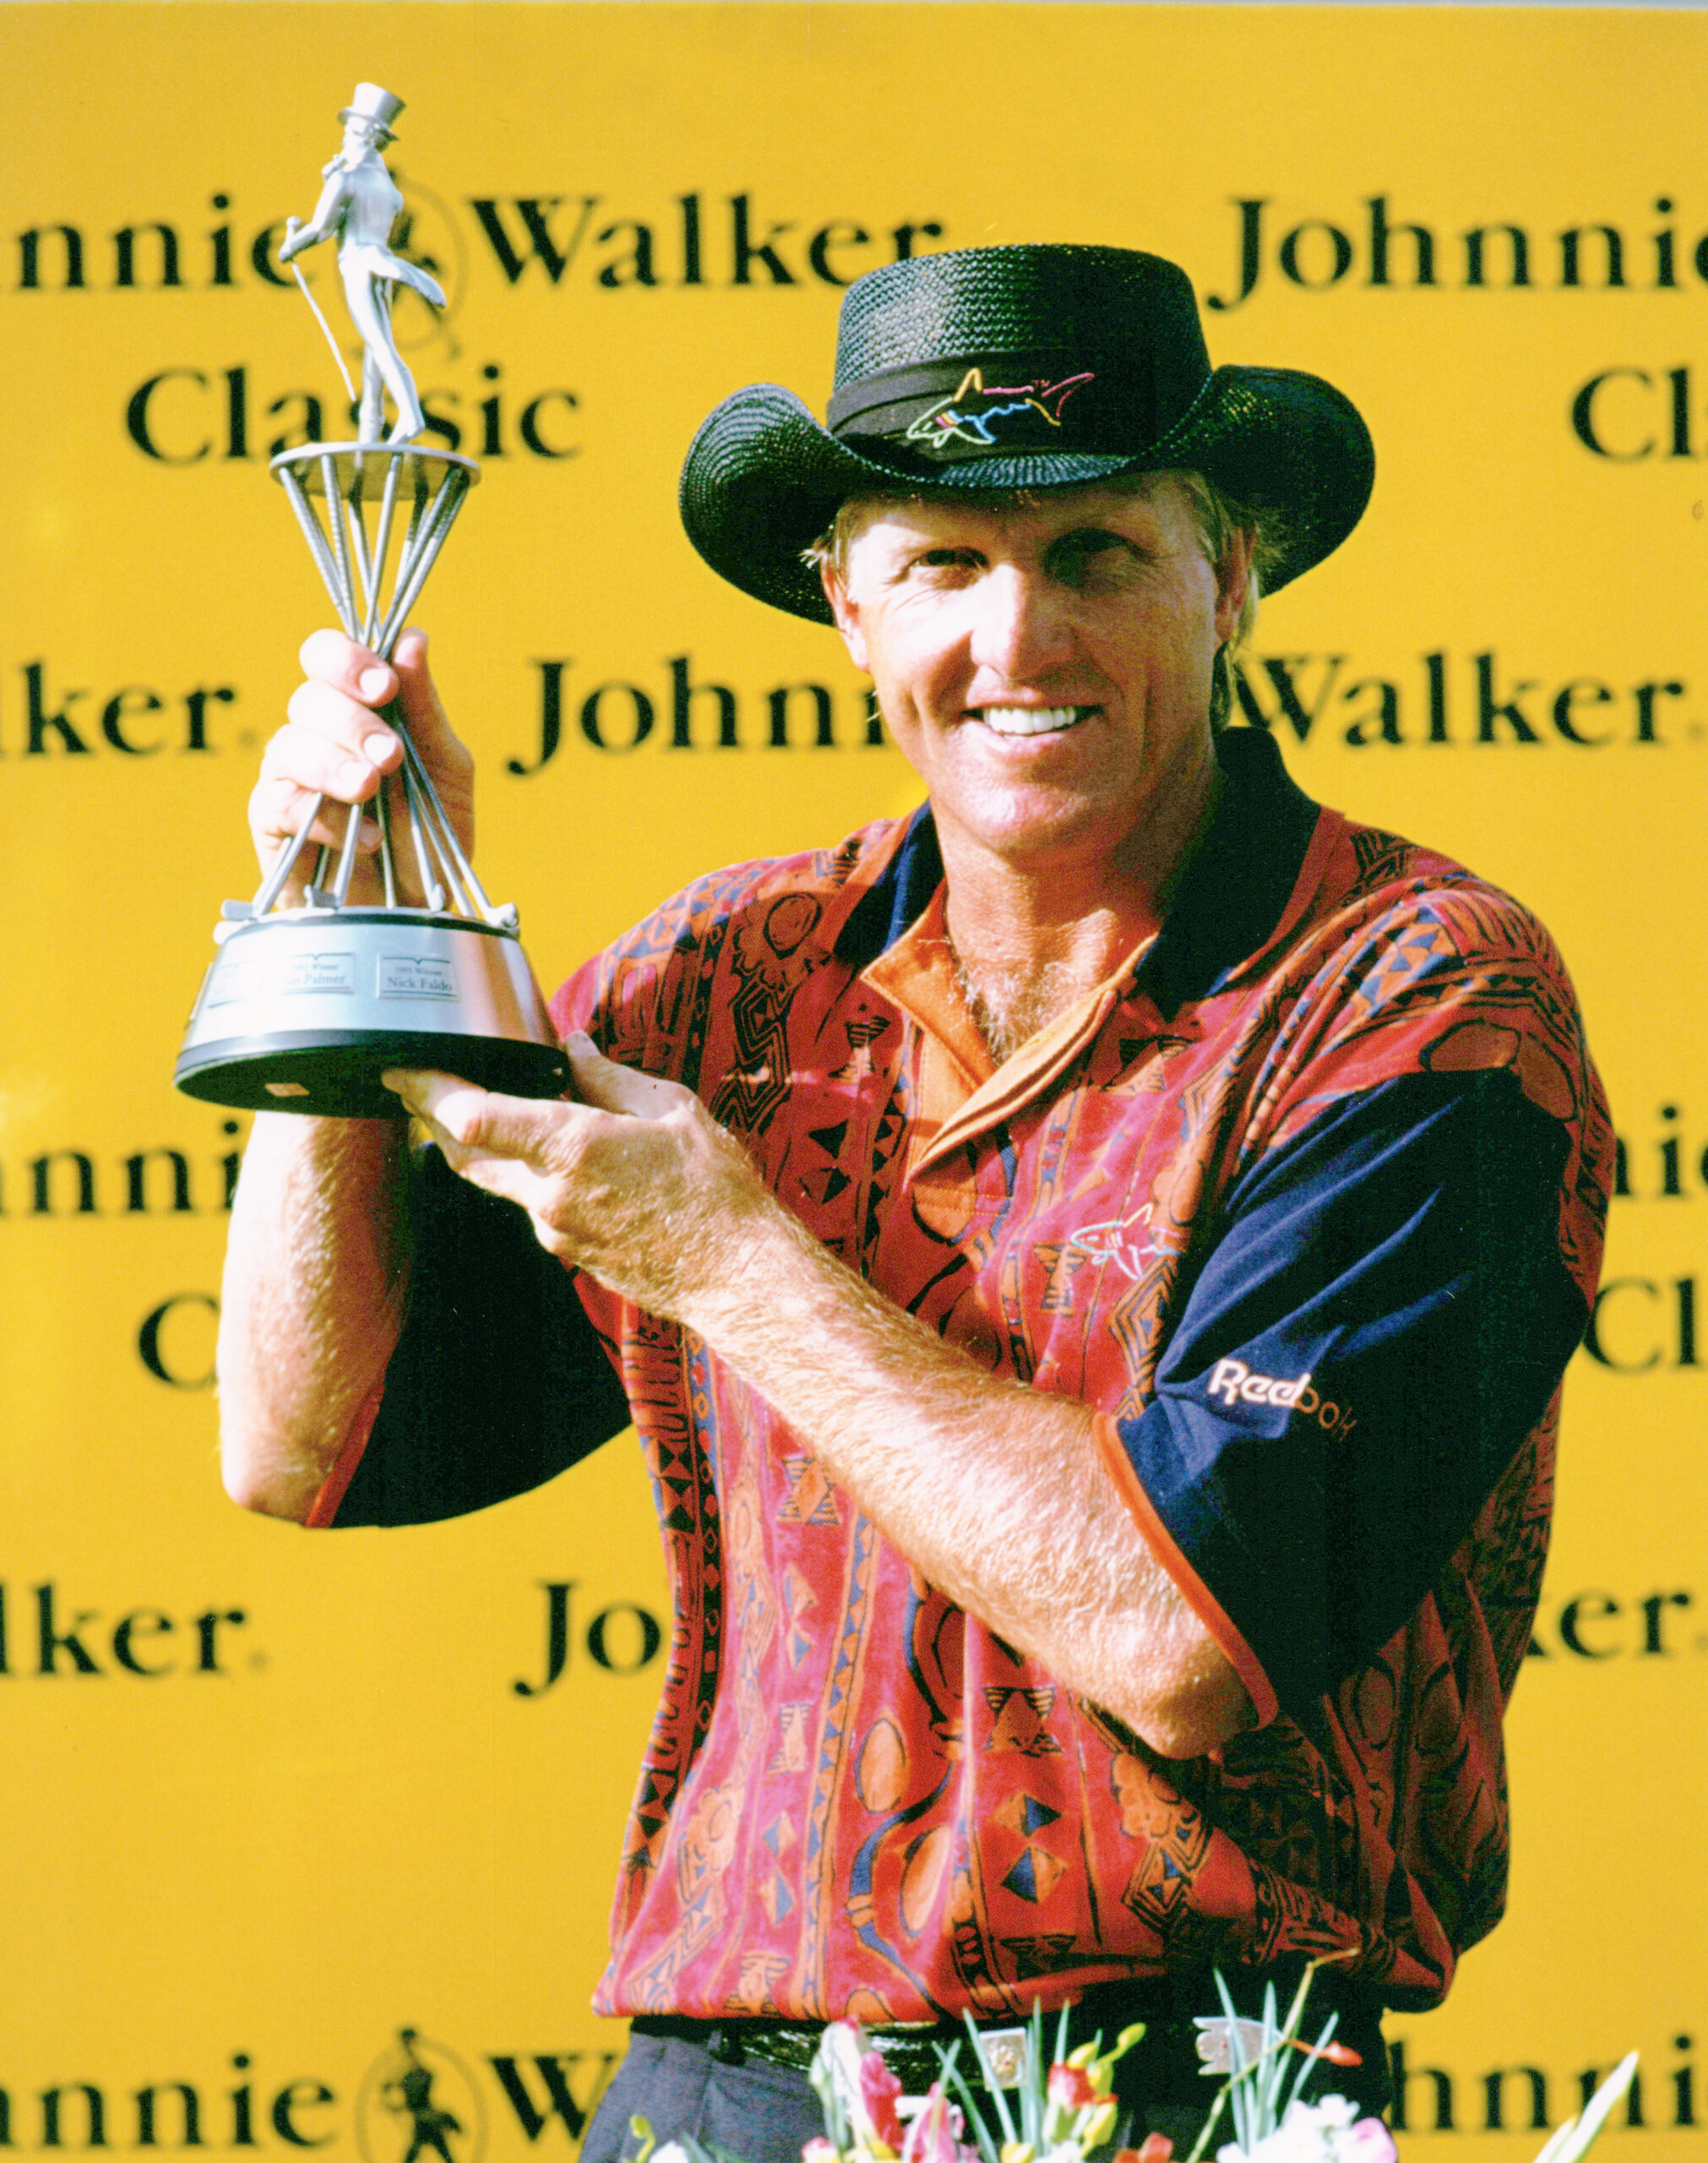 1994 Johnnie Walker Classic